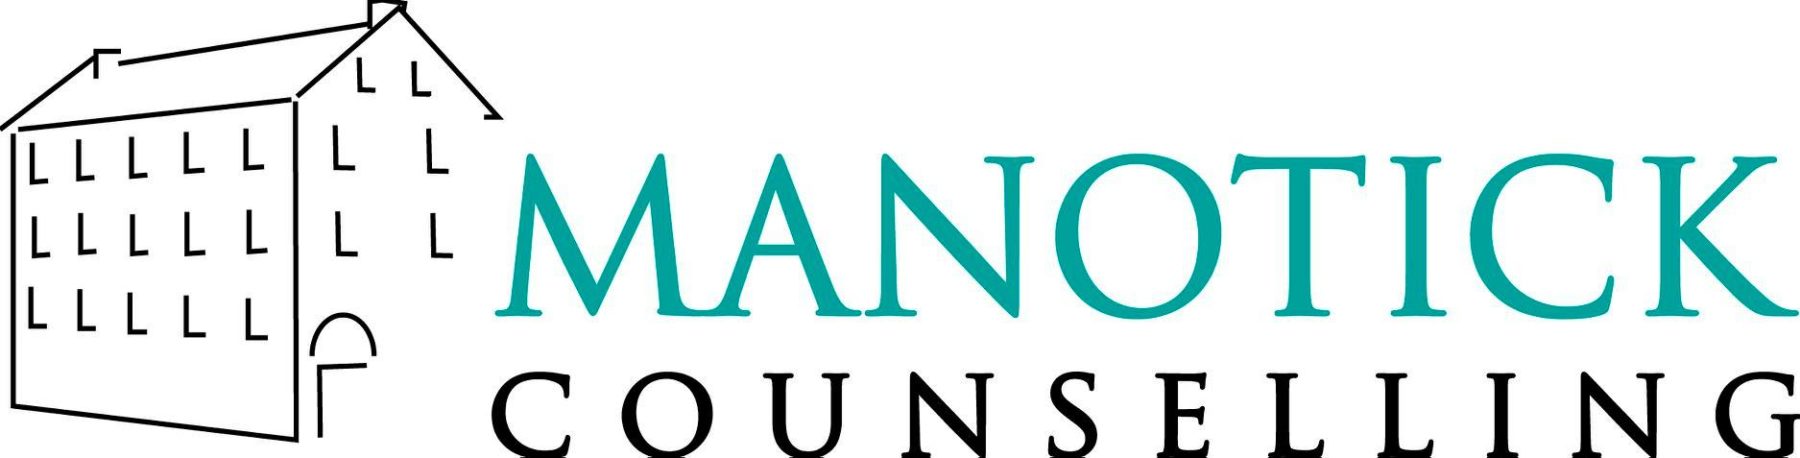 Manotick Counselling logo - Business in Manotick